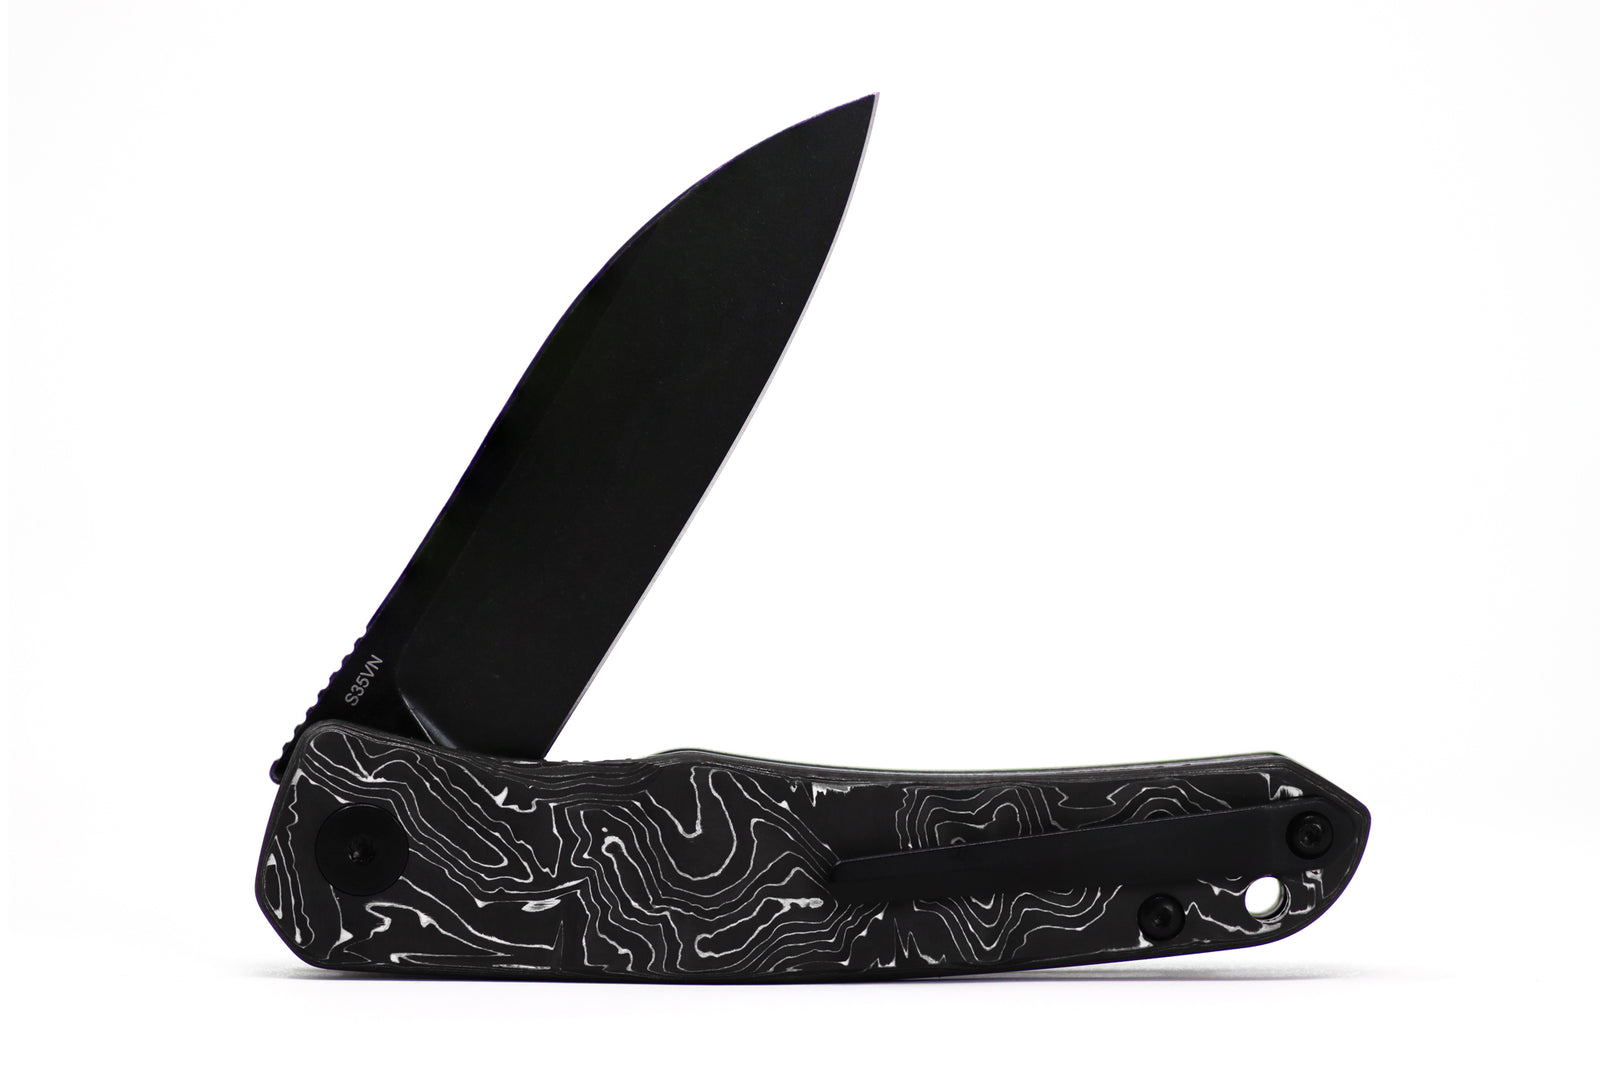 QSP Otter QS140-A2 Aluminum Foil S35VN folding Knife Black stonewashed blade EDC Every day Carry LInerlock Ceramic Bearings Kaviso